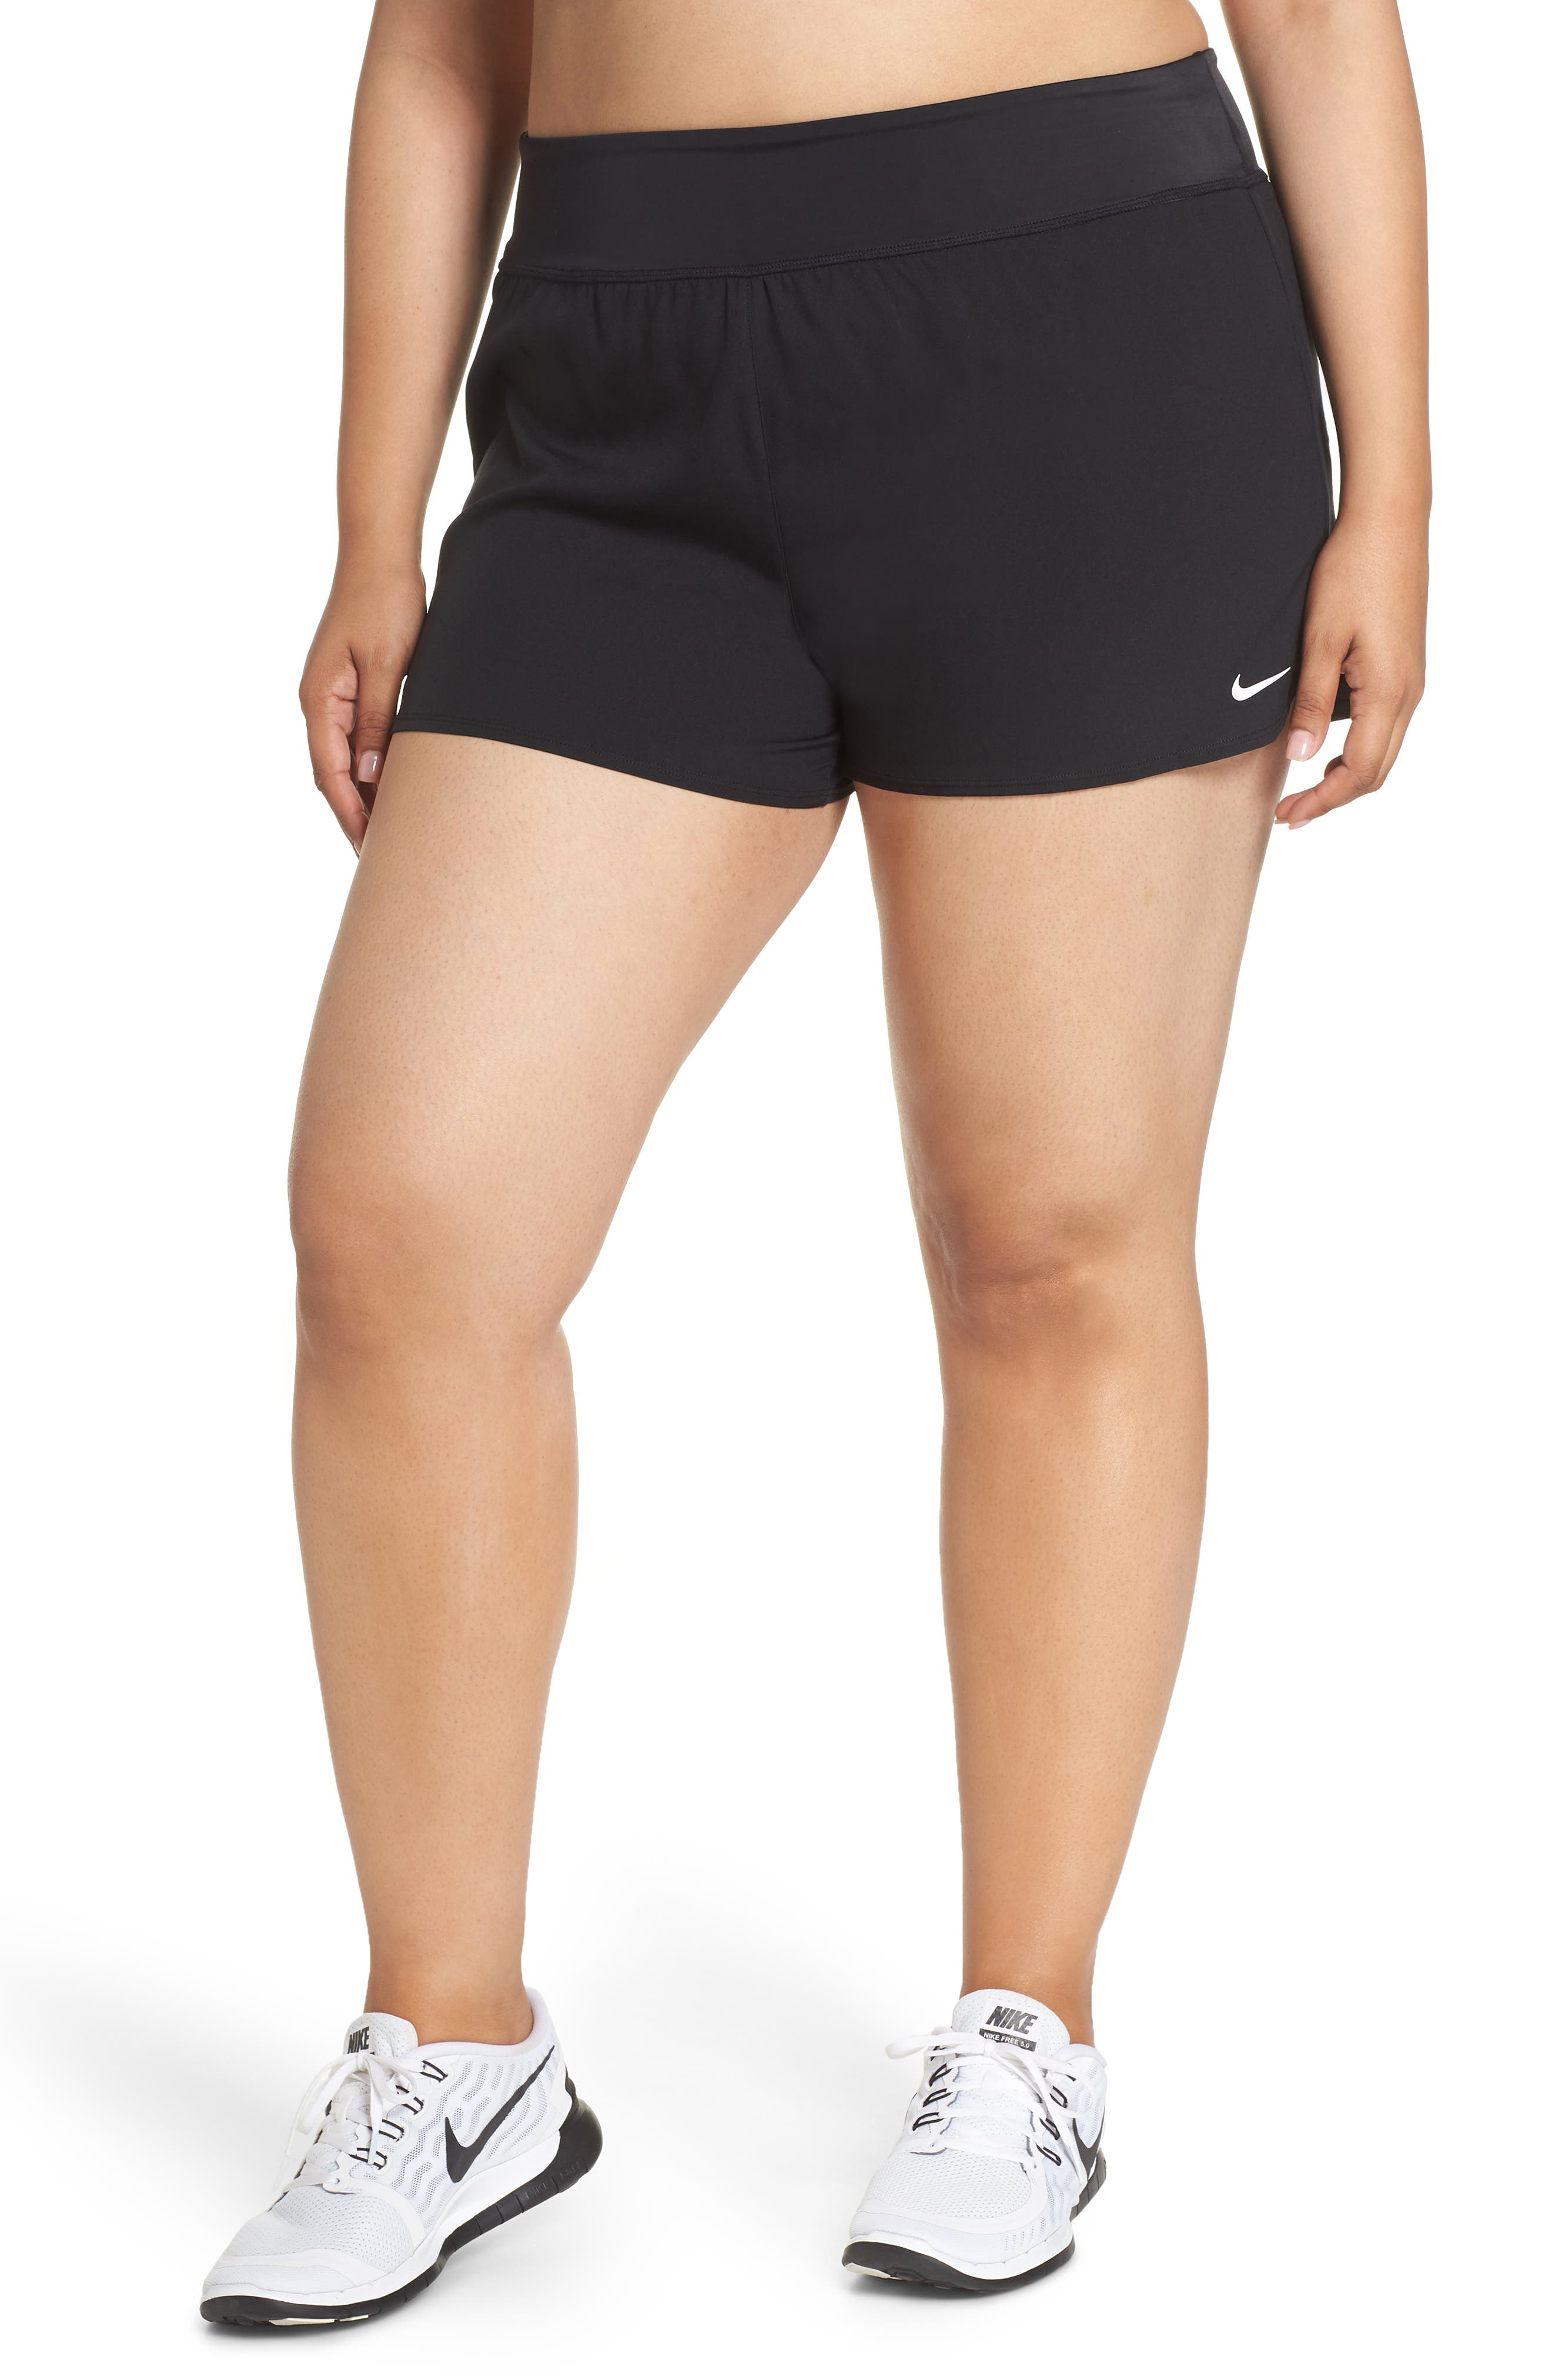 Nike Swim Board Shorts (Plus Size 